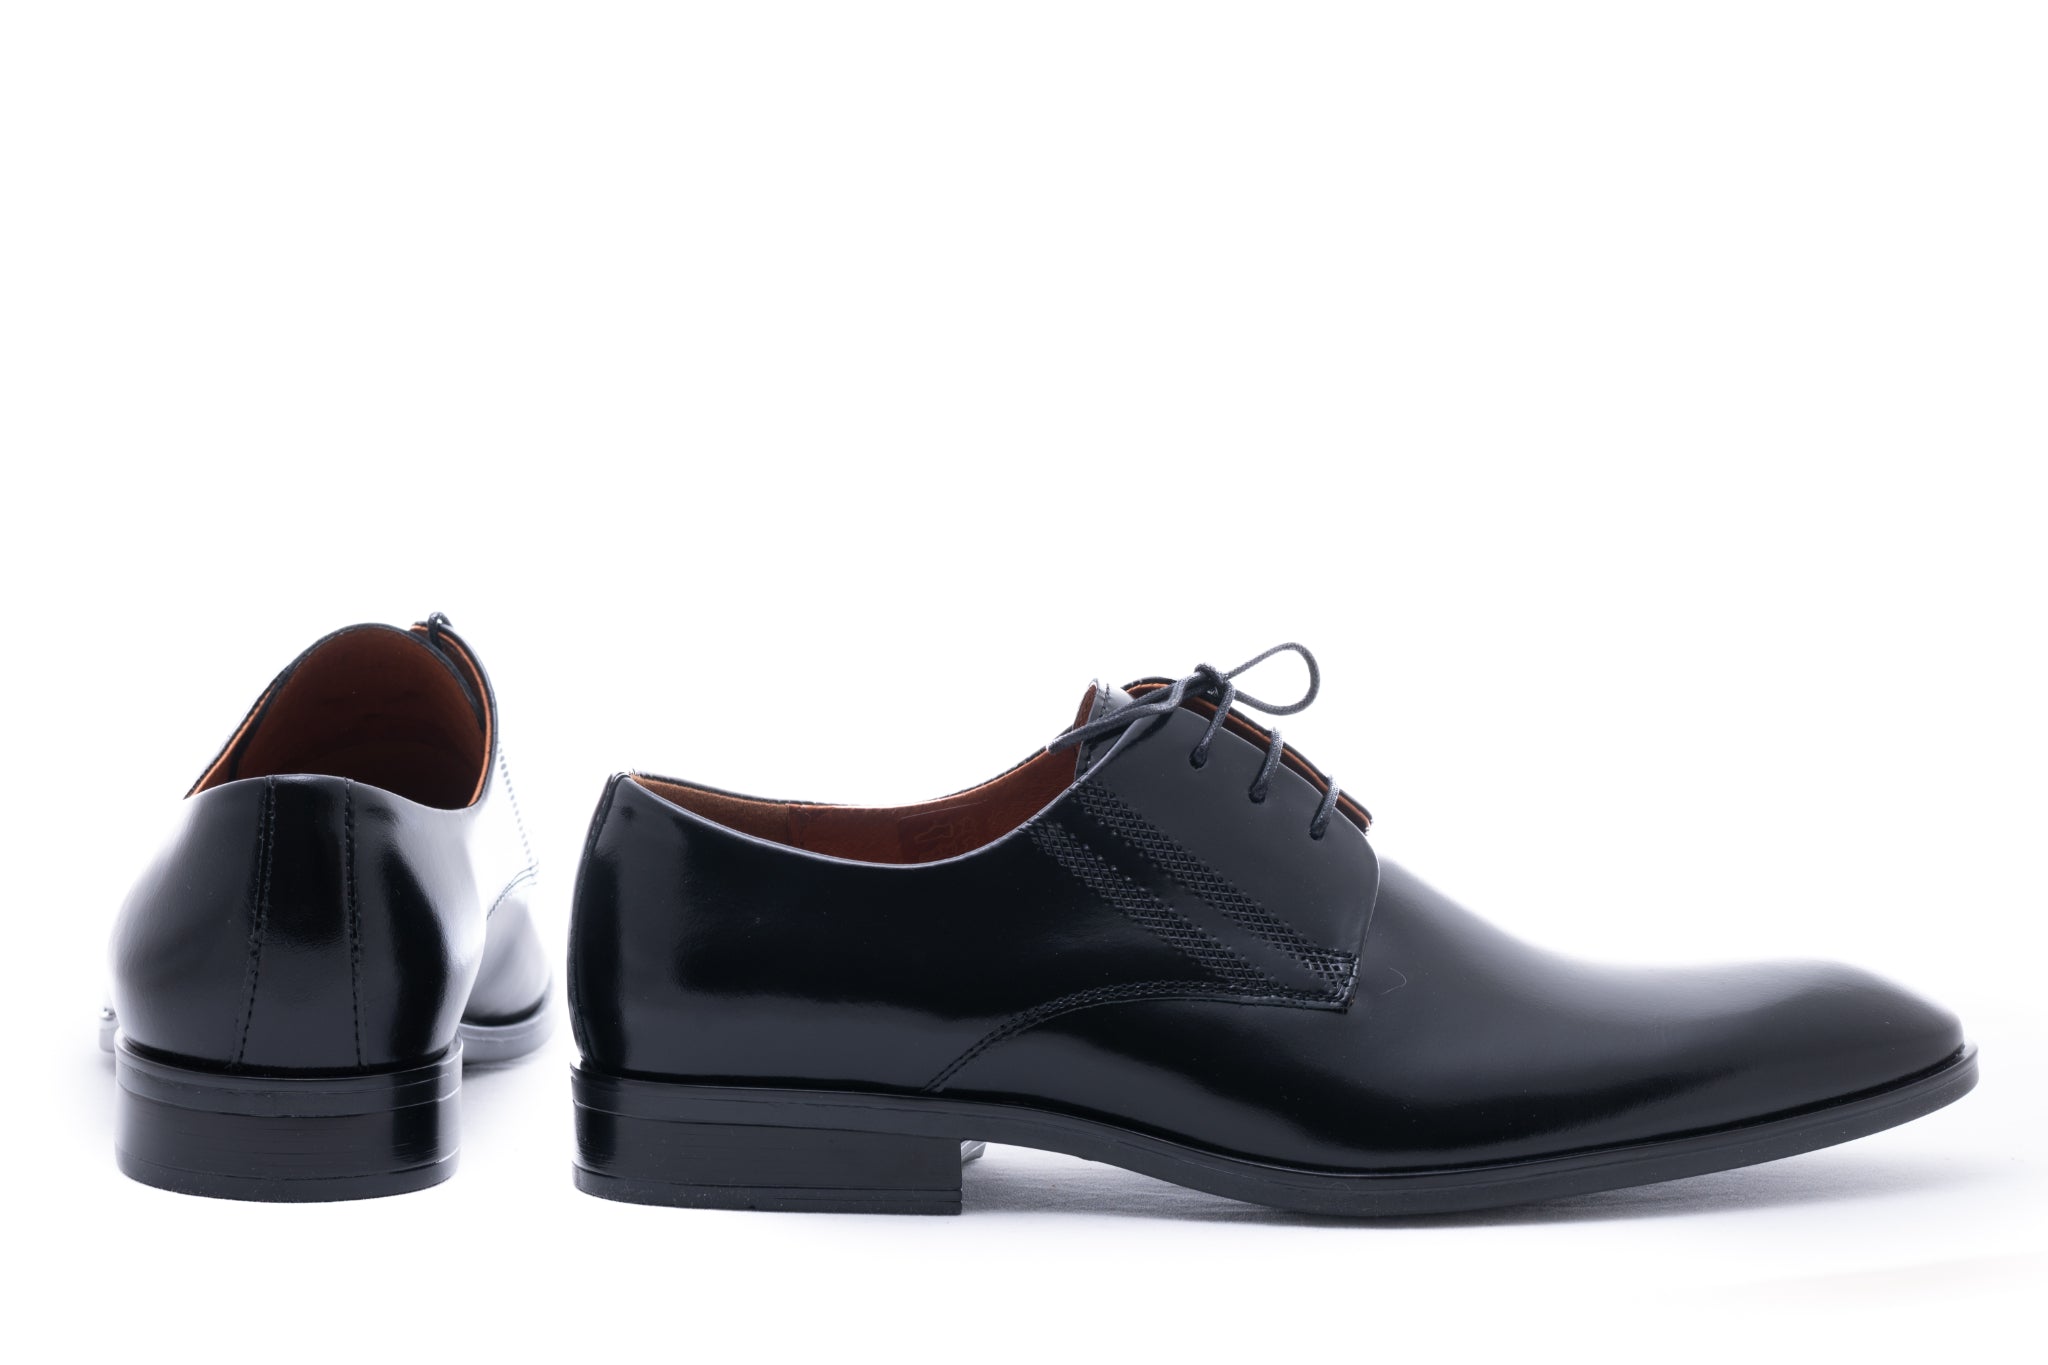 Pantofi barbati eleganti piele naturala 9134 negru